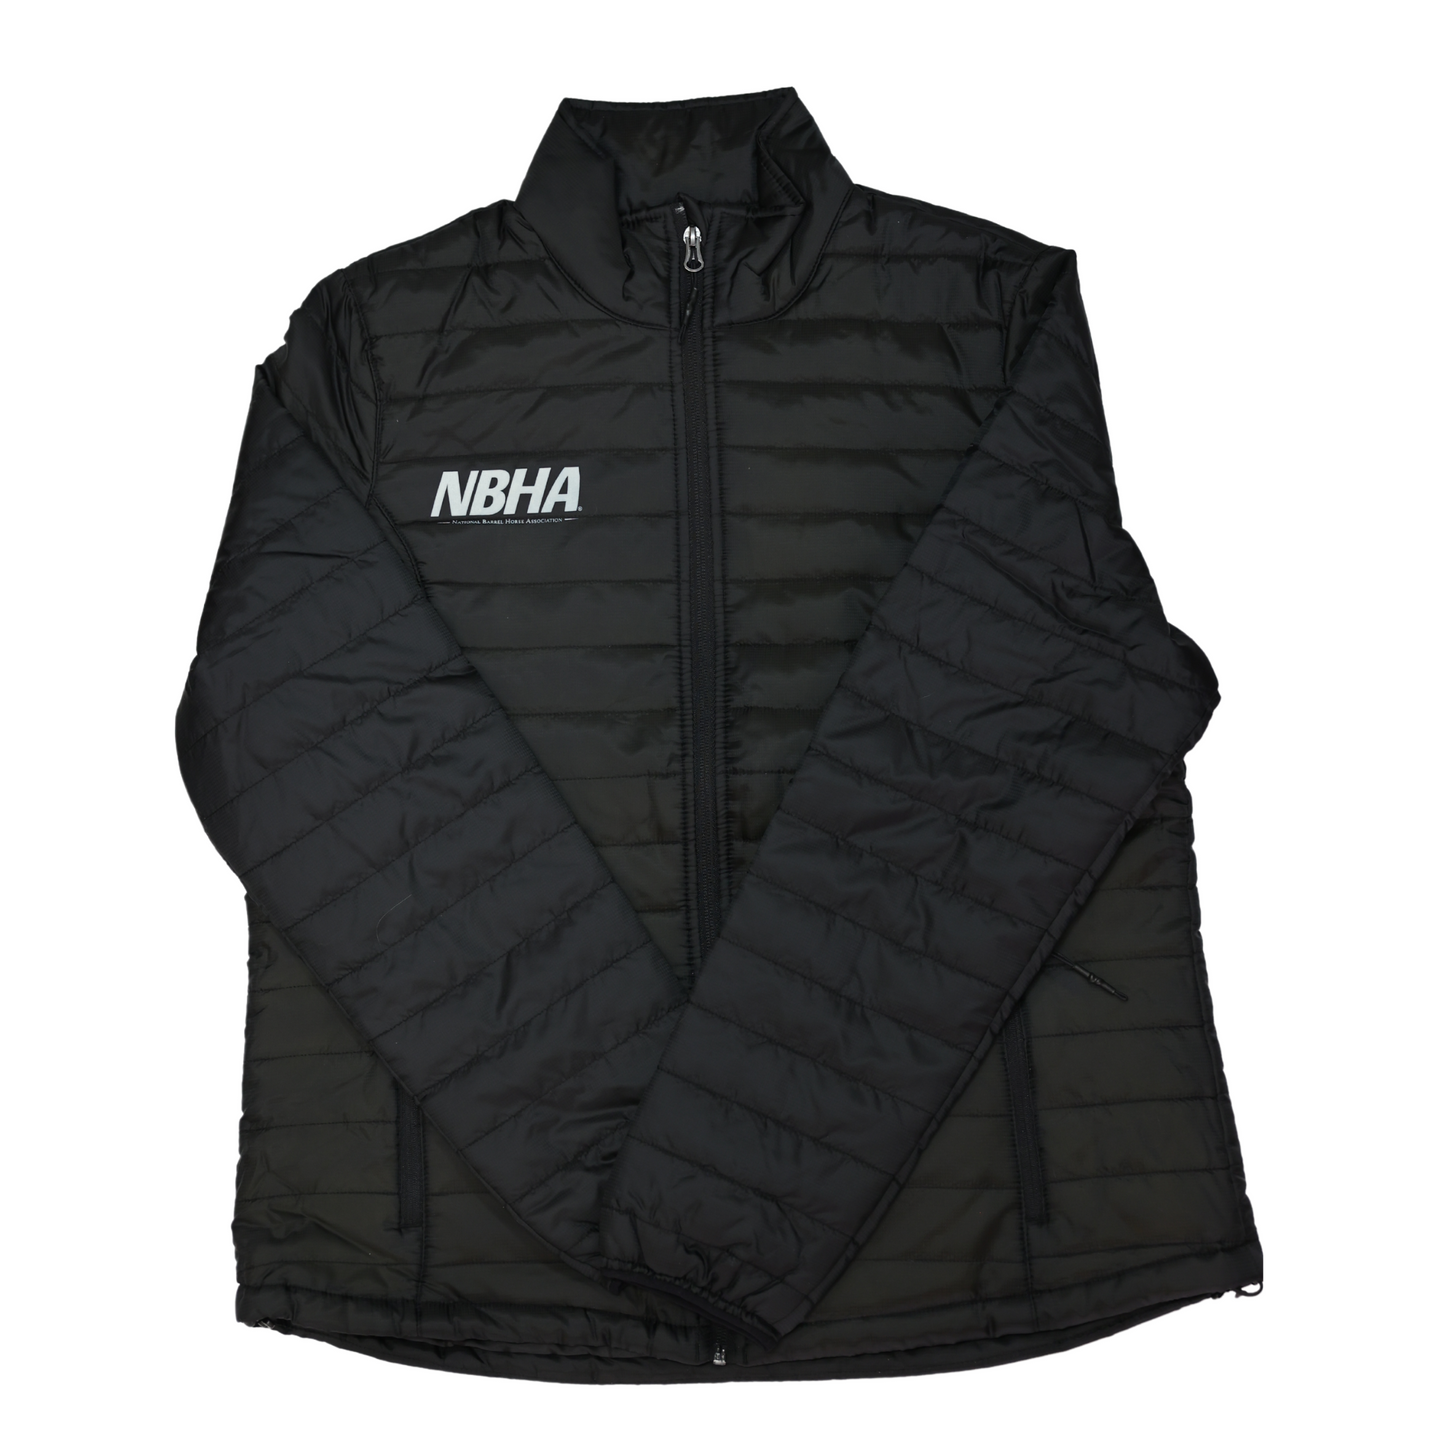 NBHA Women's Full Zip Puffer Jacket : Black